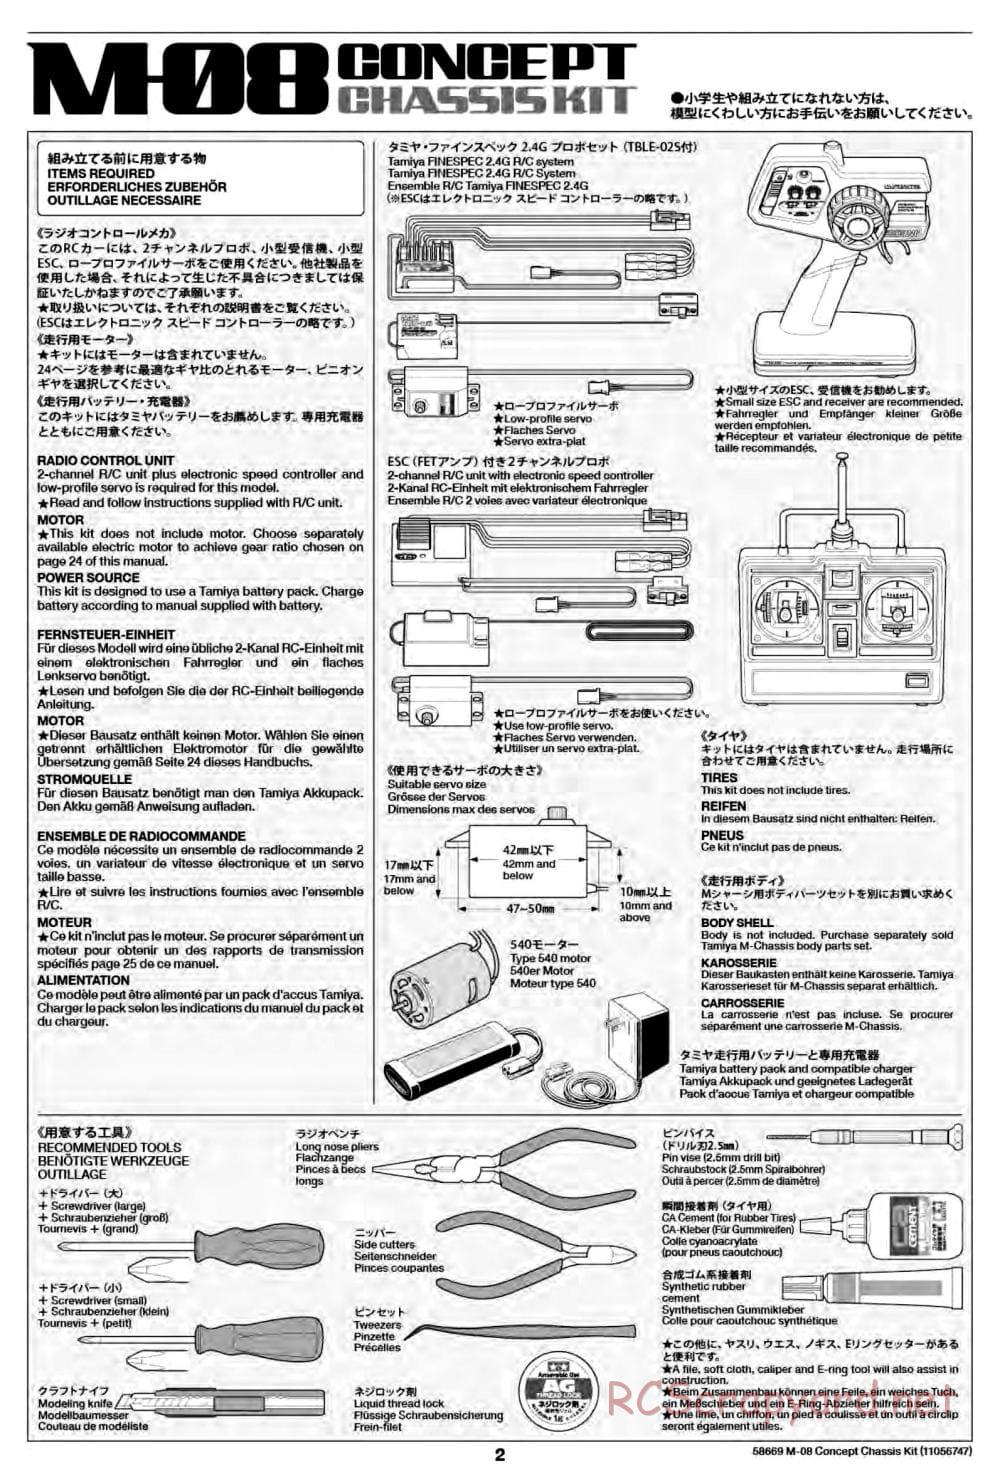 Tamiya - M-08 Concept Chassis - Manual - Page 2